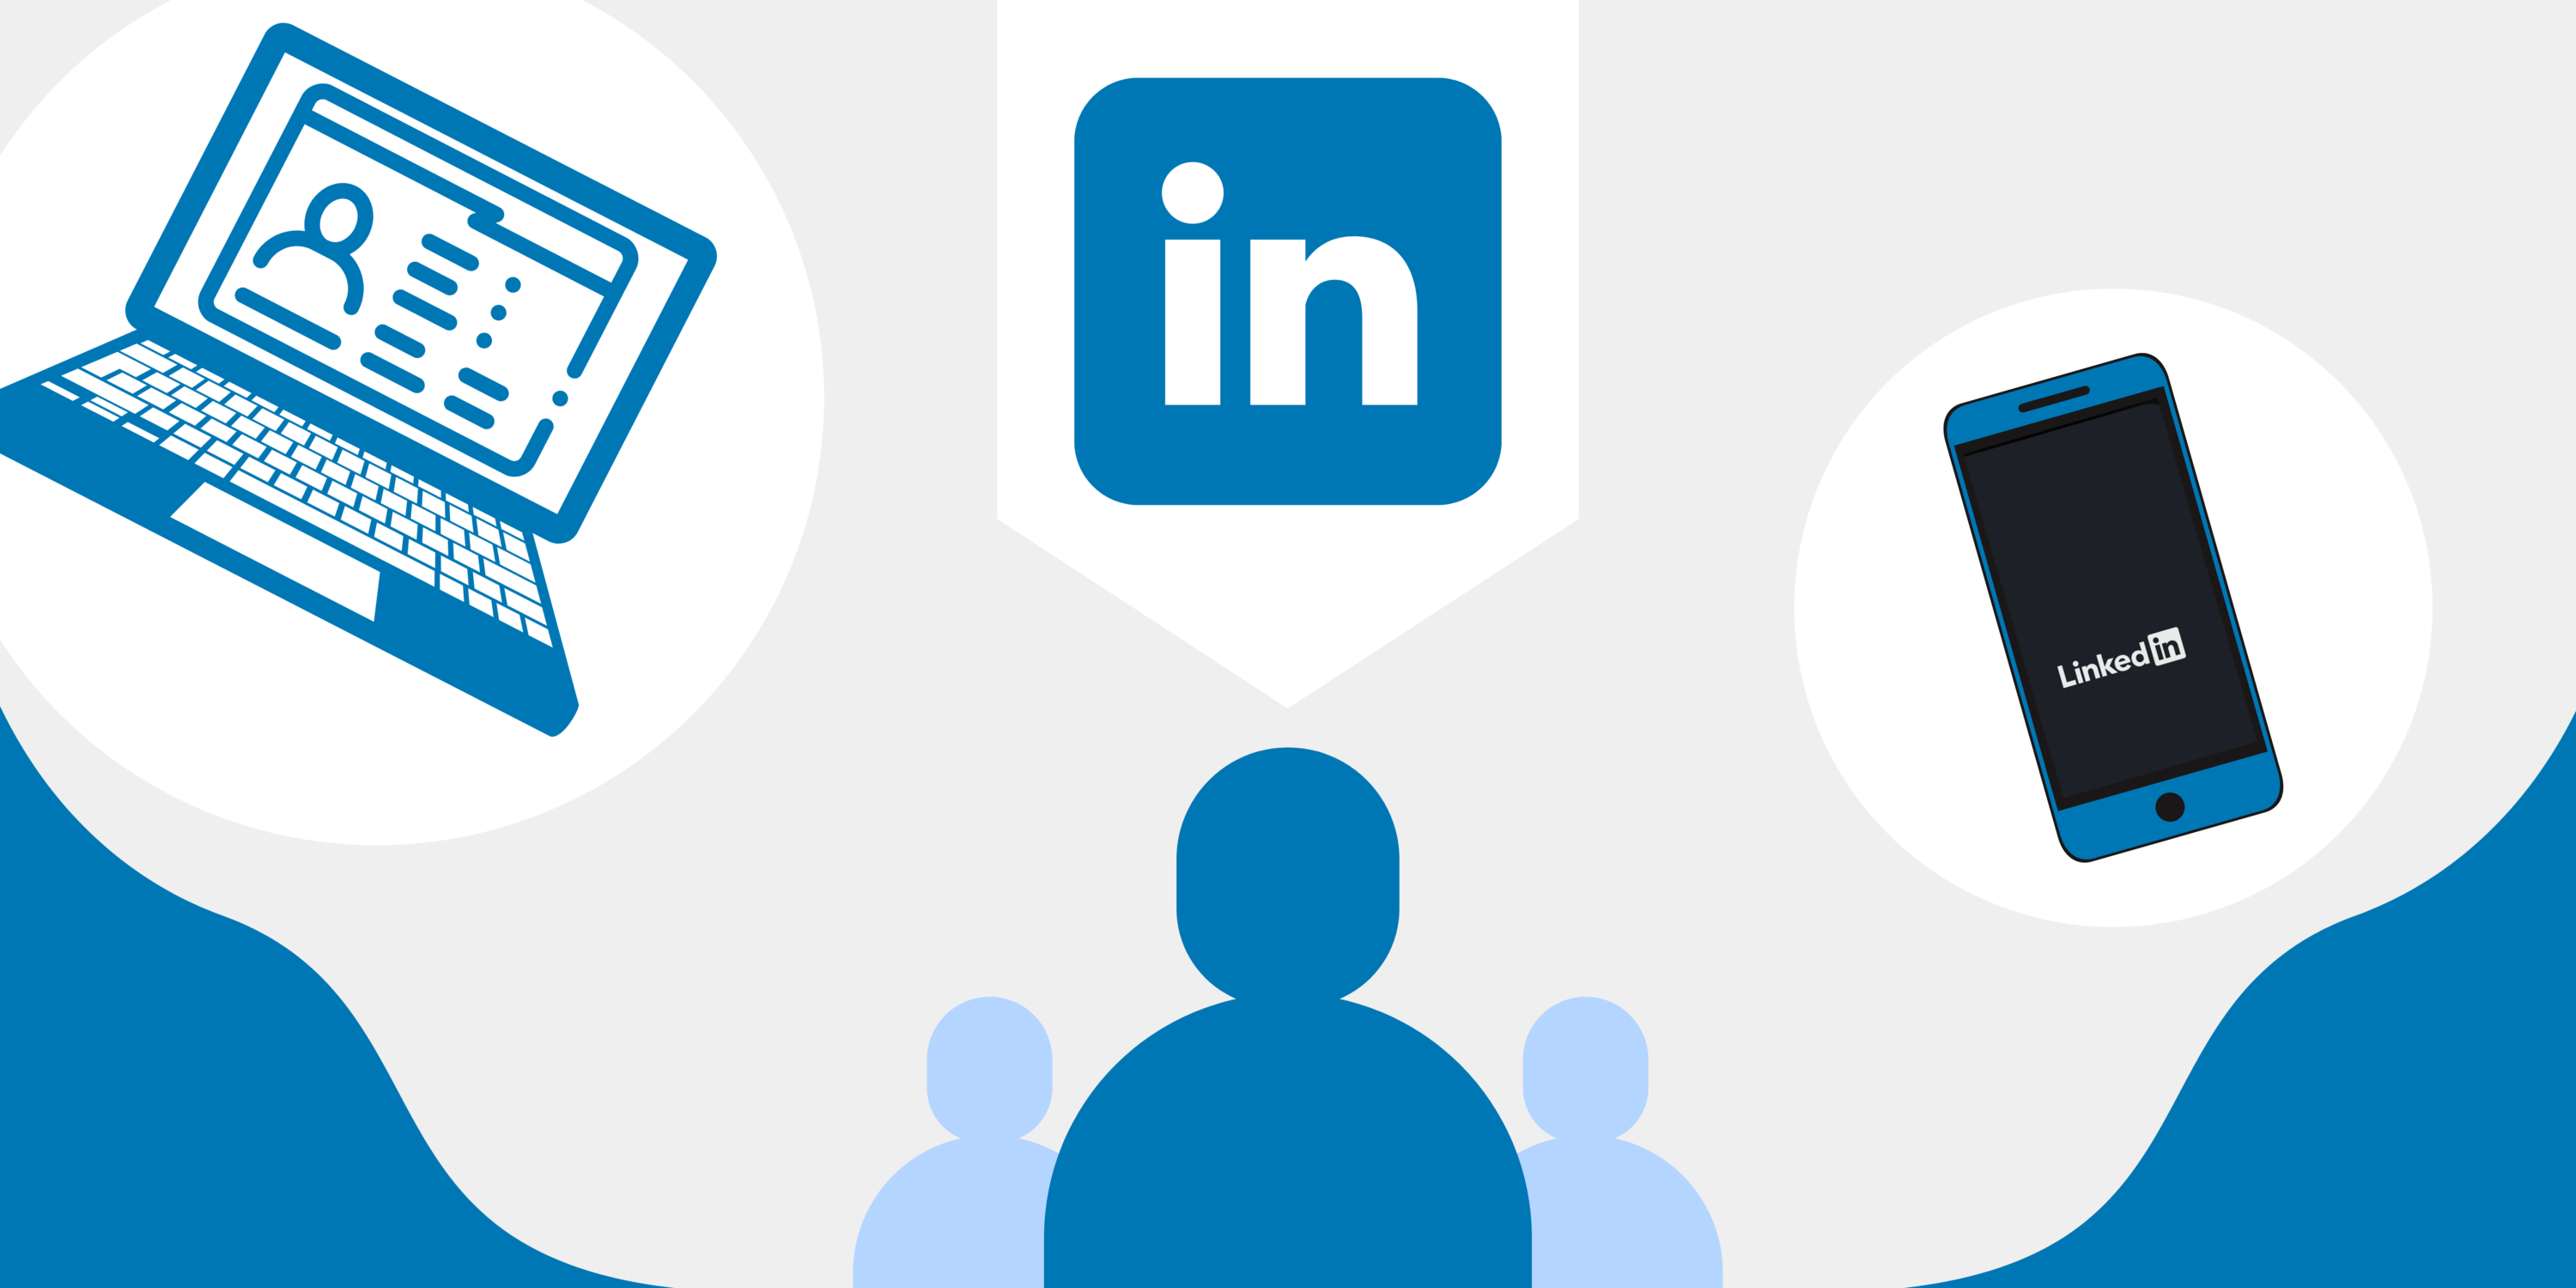 Listing page image for LinkedIn profile tips blog